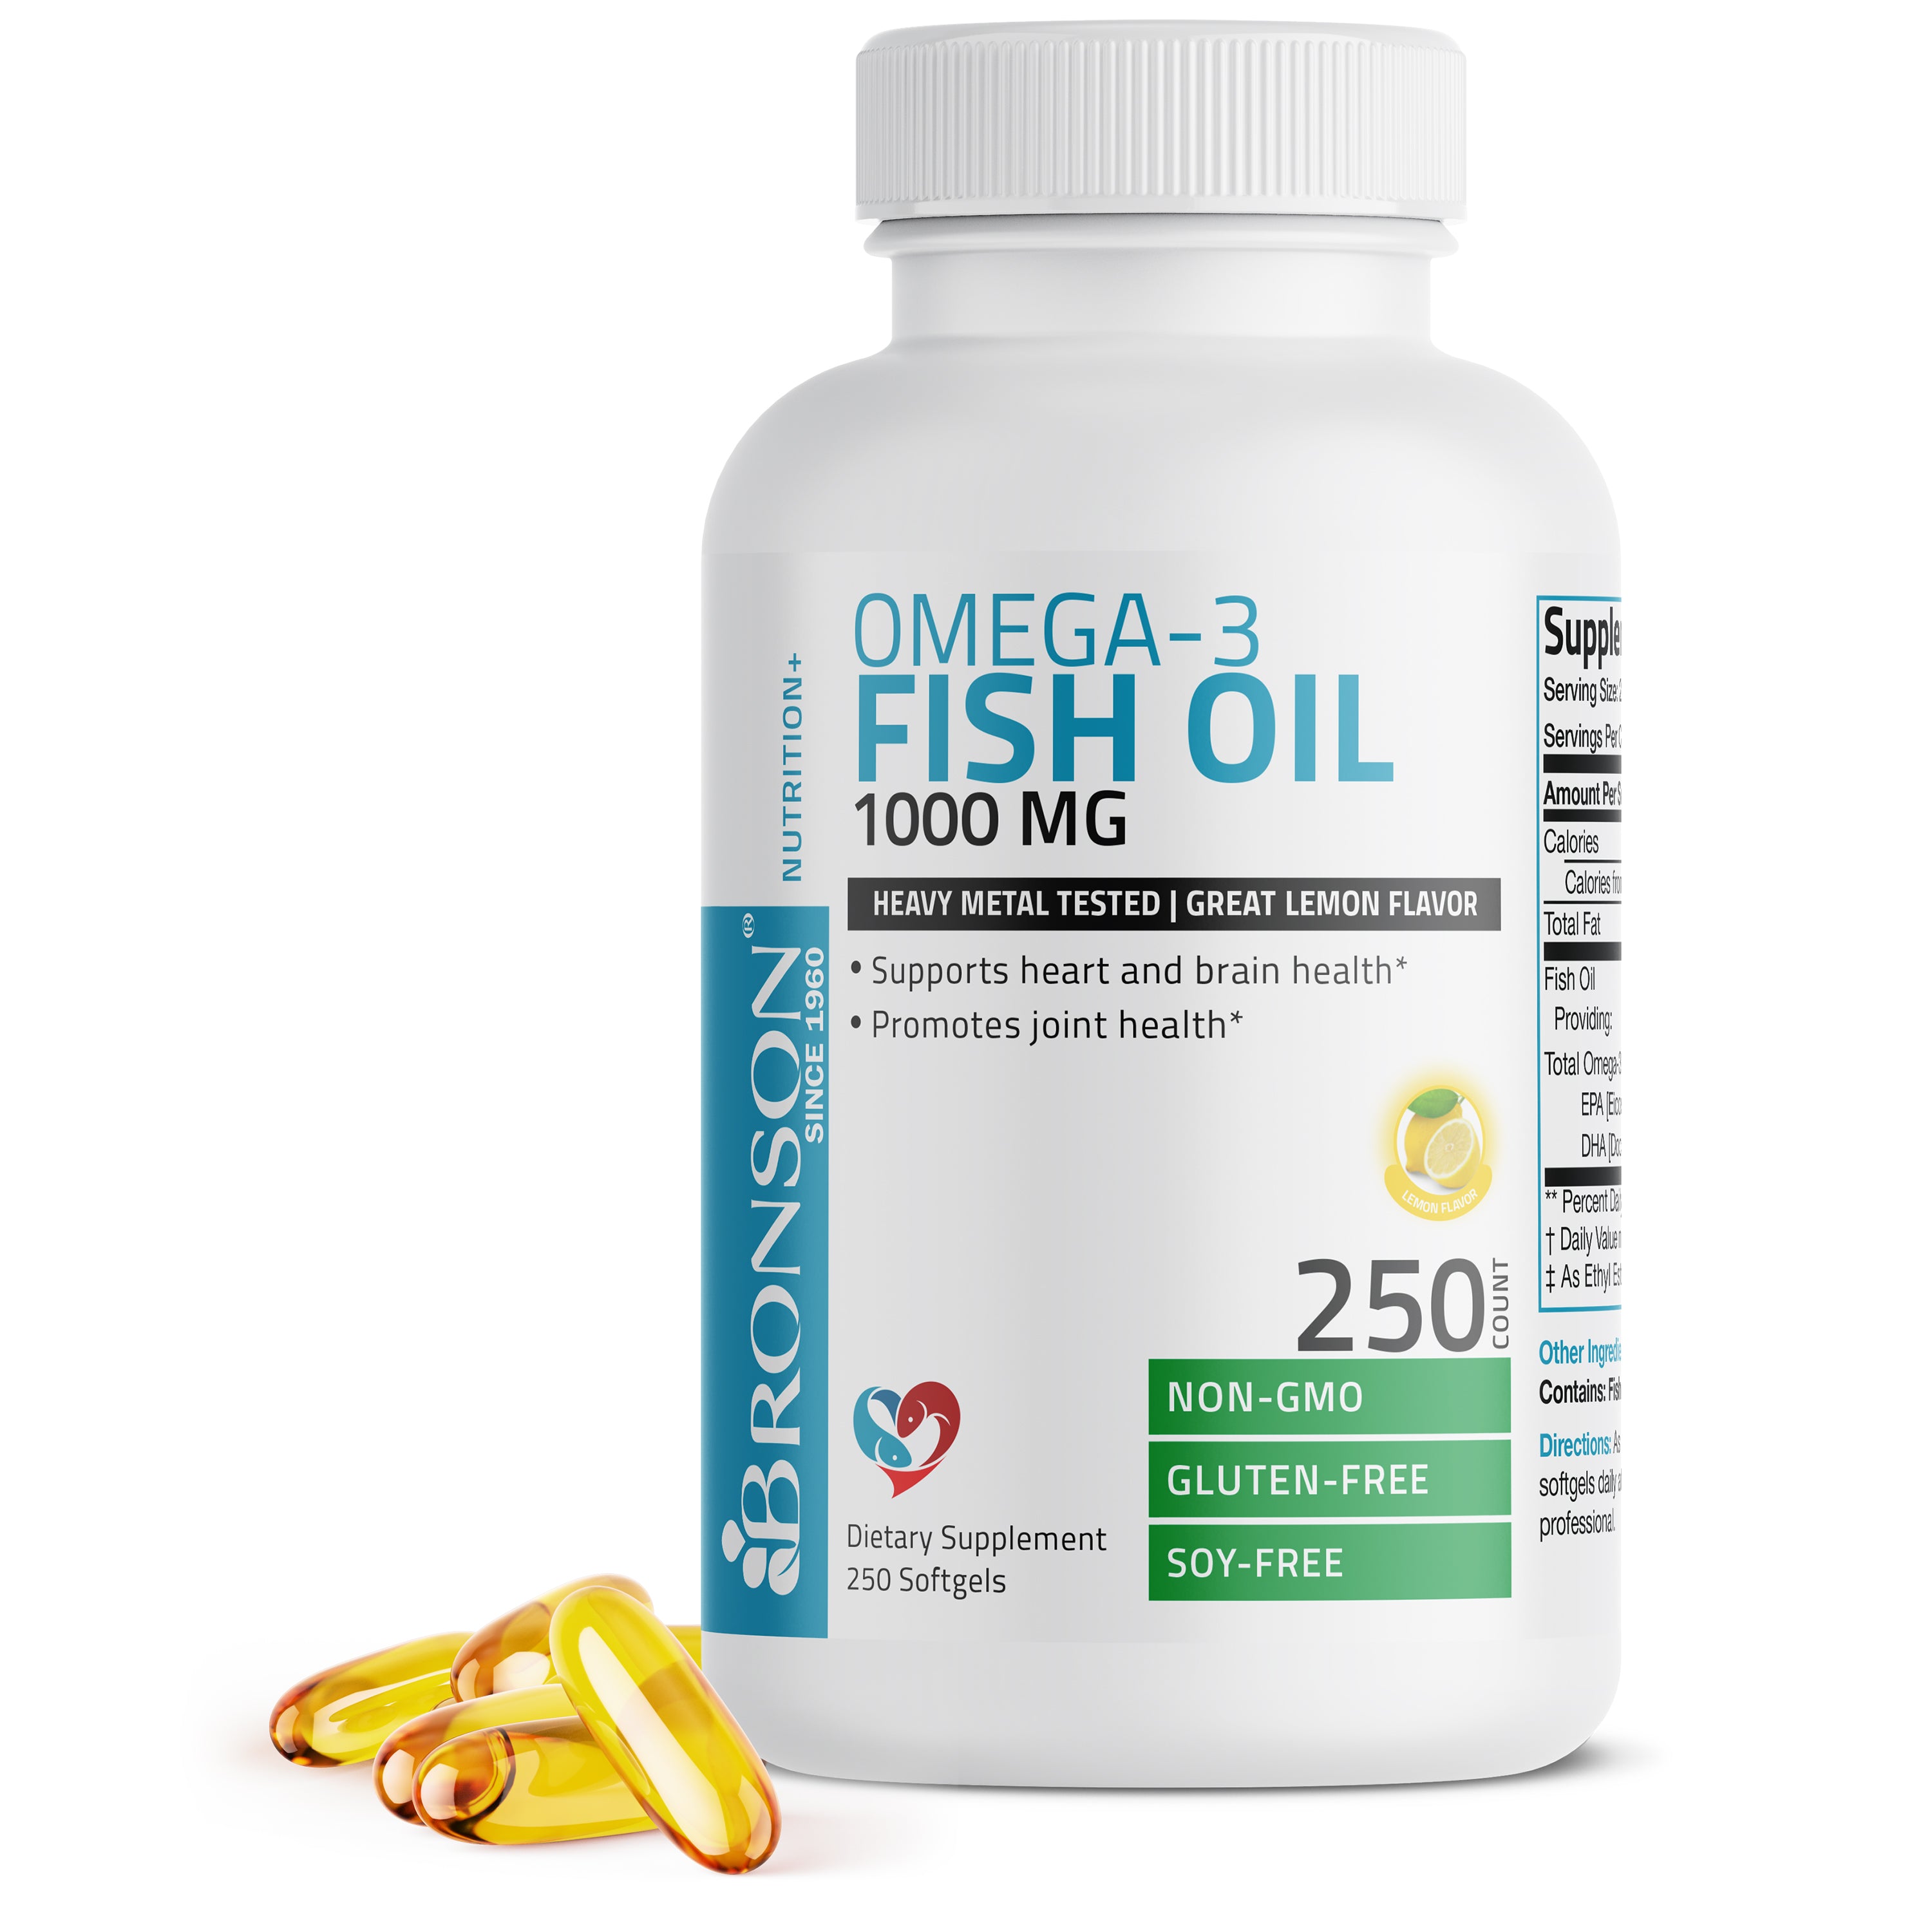 Omega-3 Fish Oil  EPA & DHA - 1,000 mg - 250 Softgels view 1 of 6